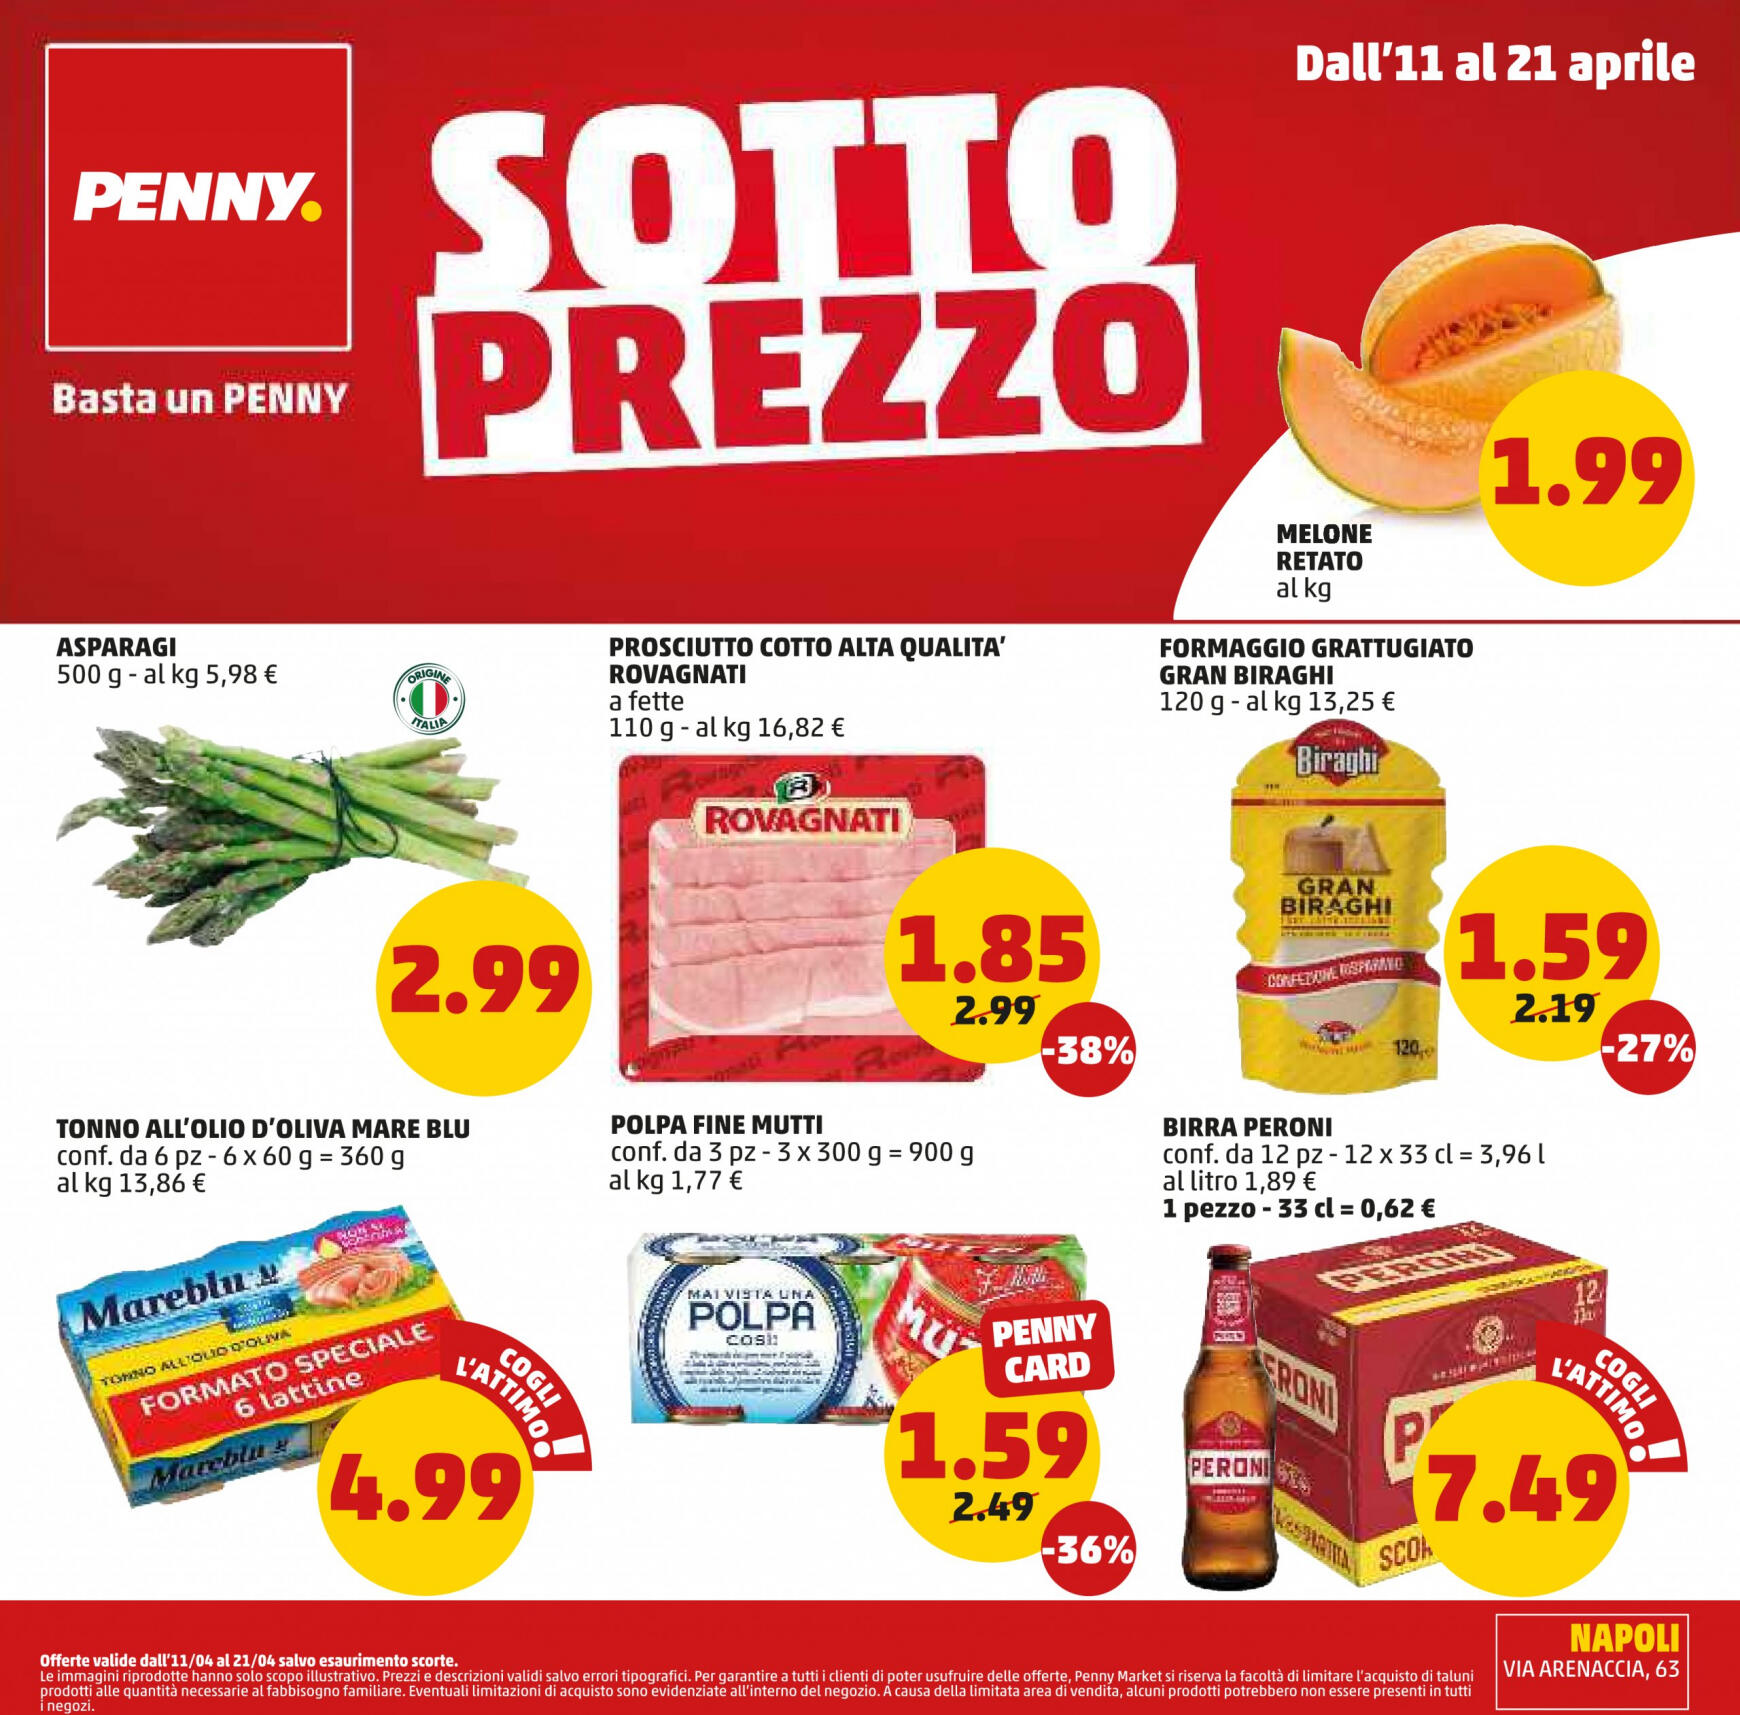 penny - Nuovo volantino PENNY 11.04. - 21.04. - page: 1